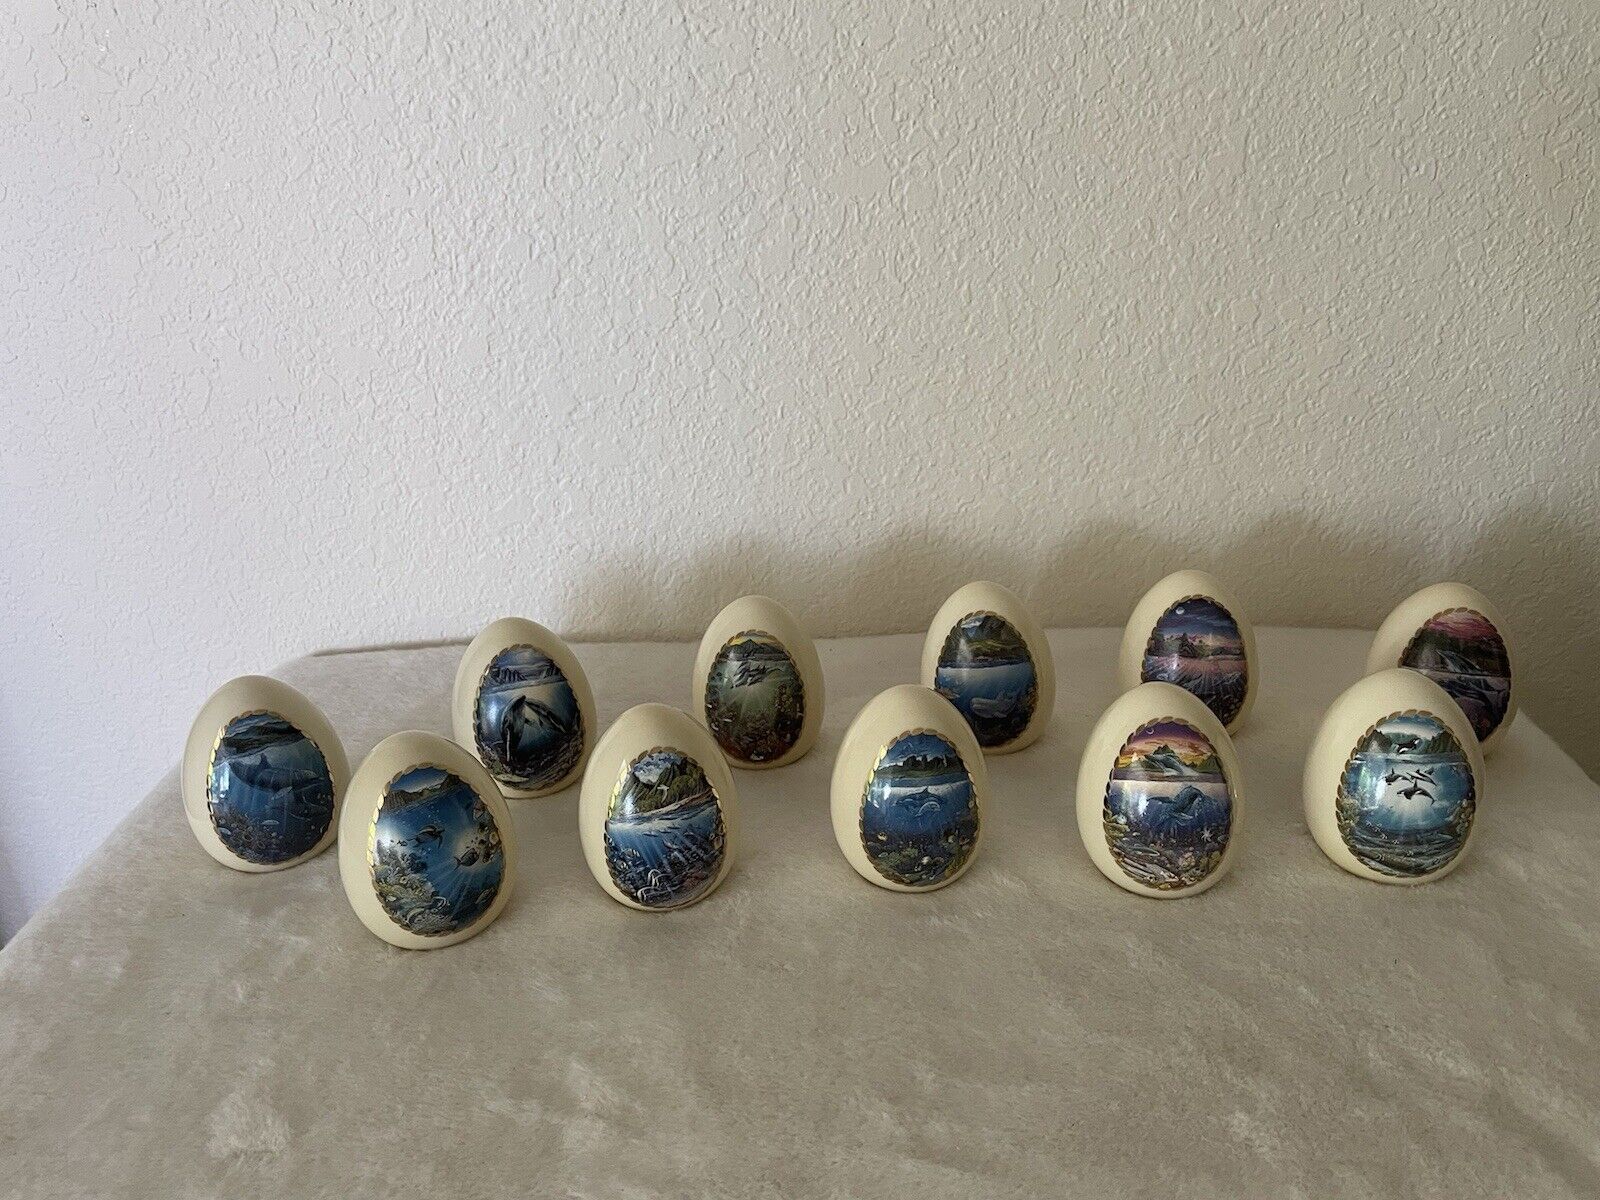 Splendors of the Sea 1995 Porcelain Egg Collection by Robert Lyn Nelson